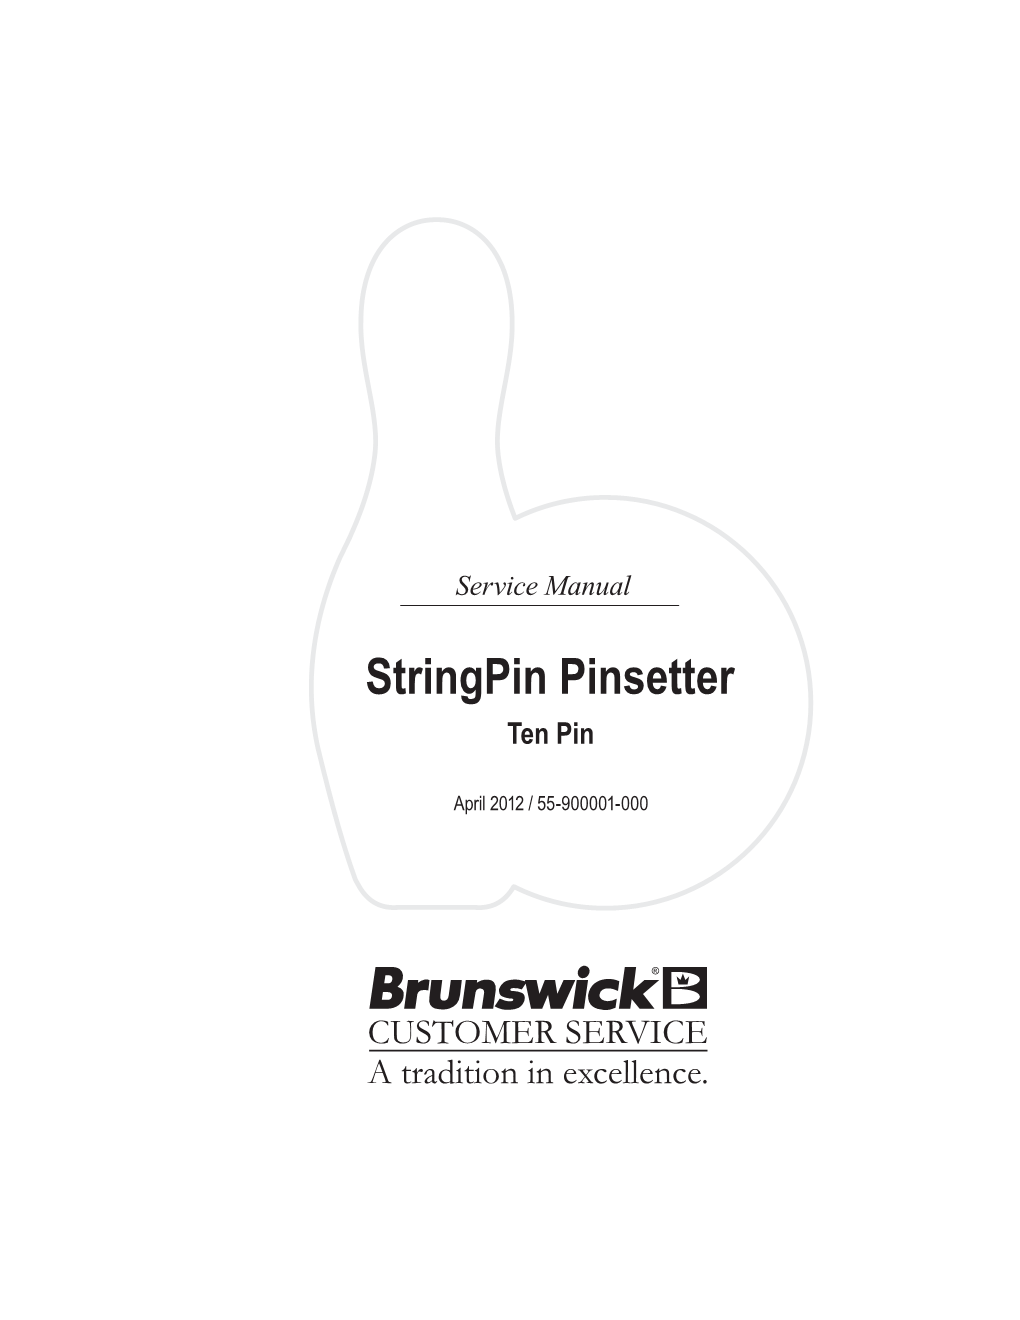 Stringpin Pinsetter Service Manual